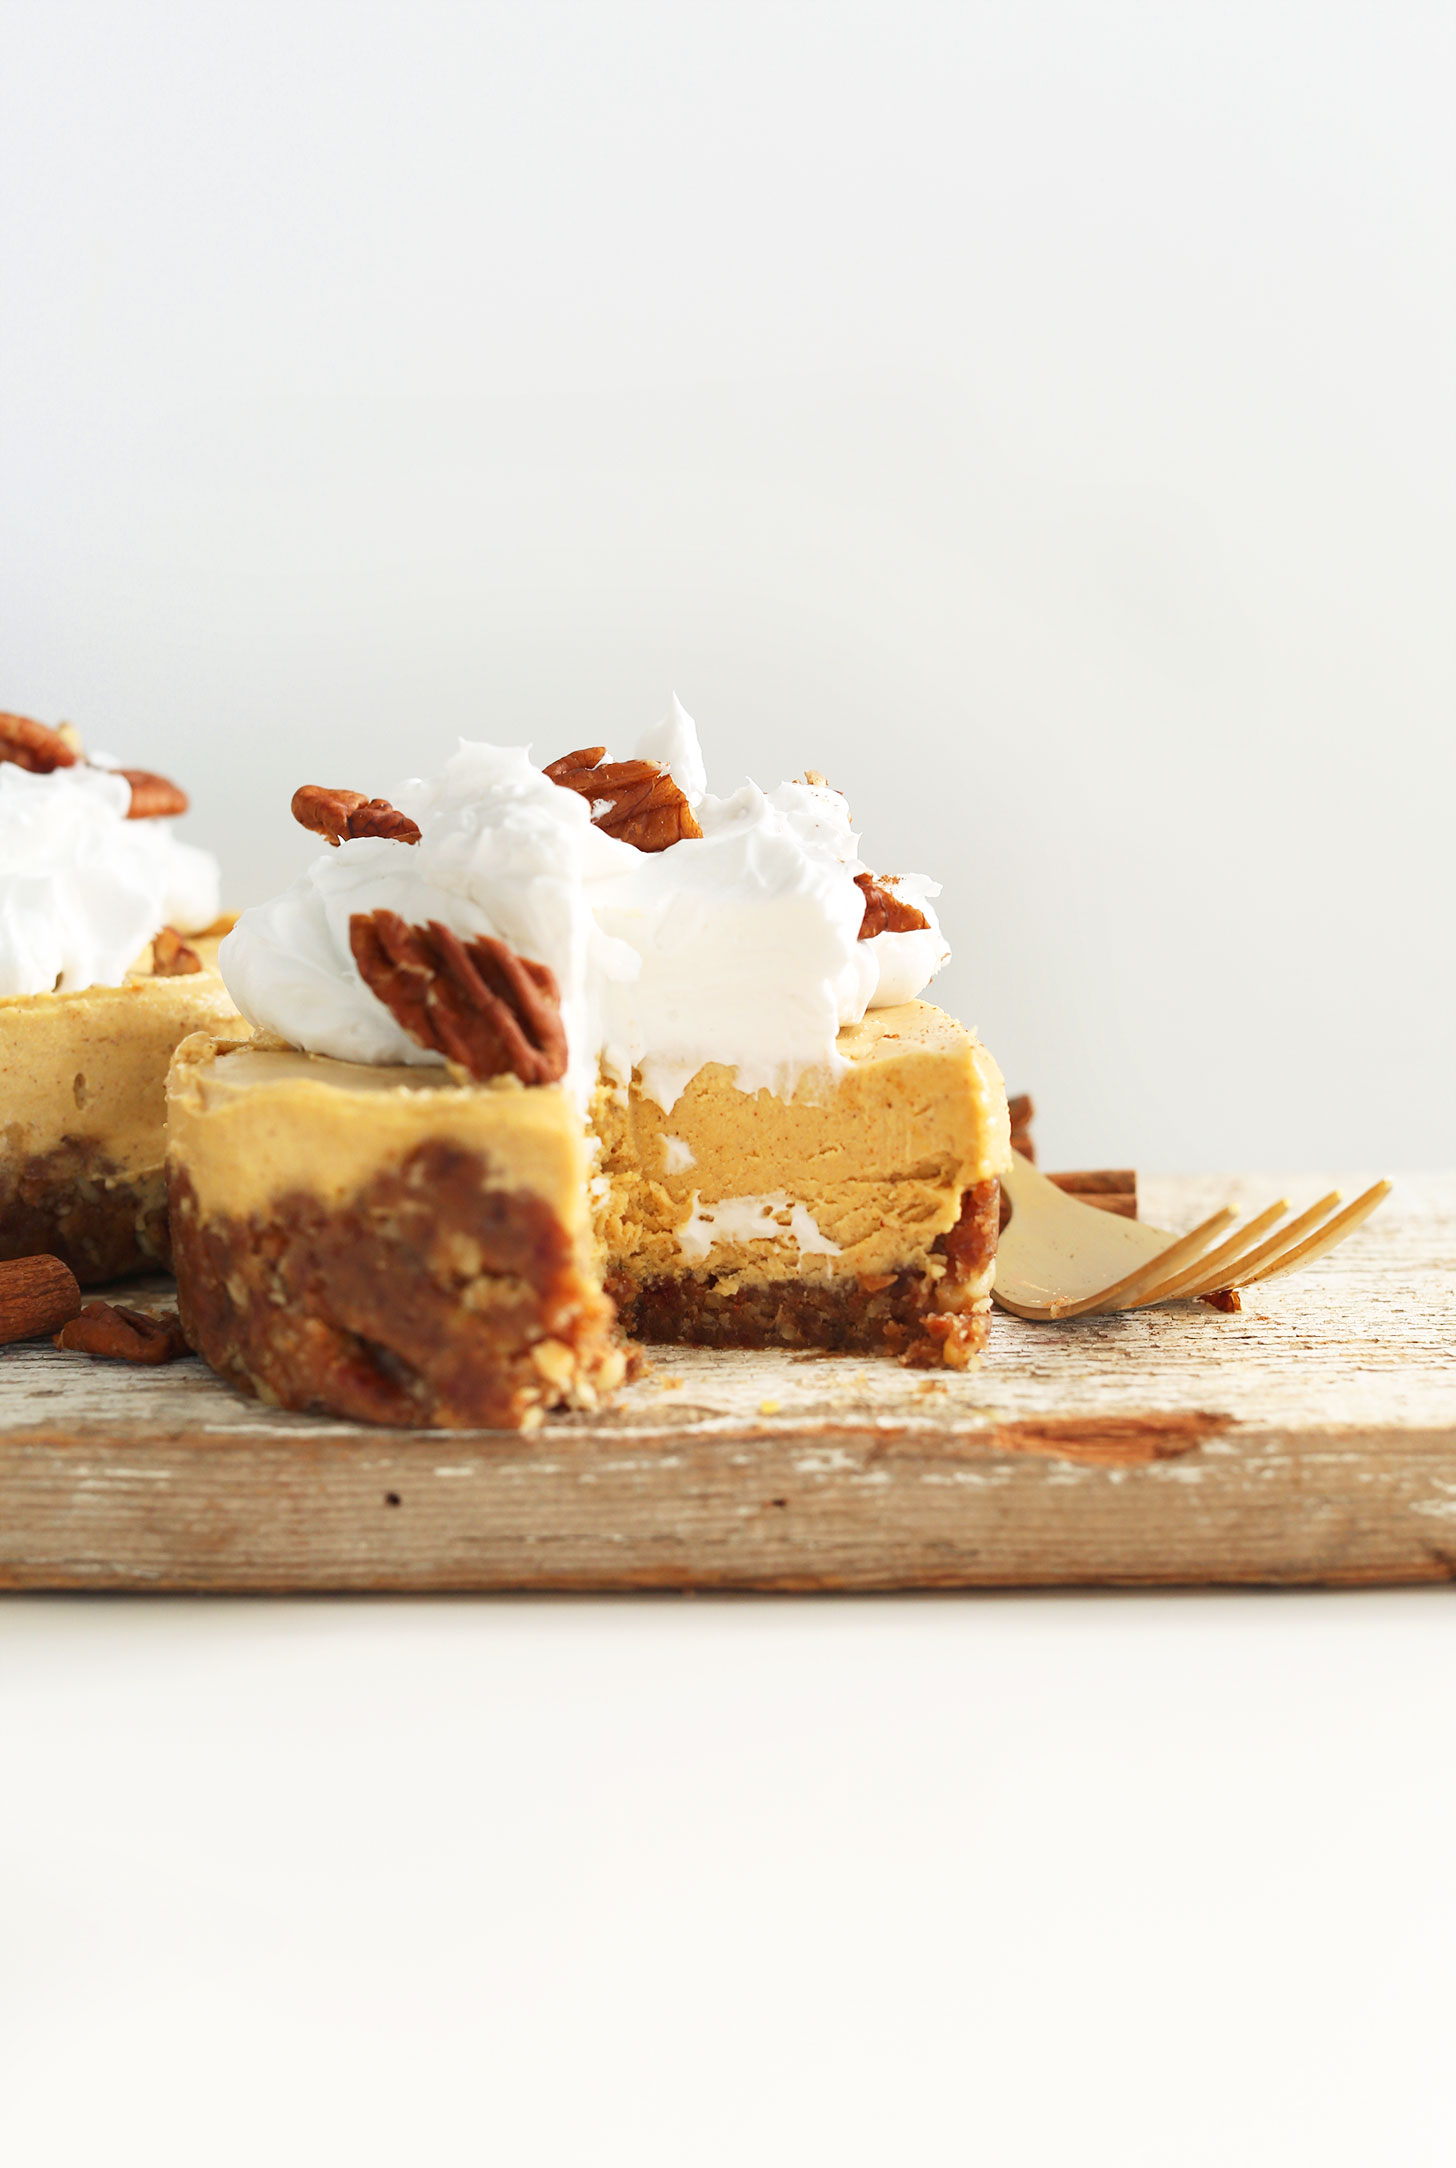 https://minimalistbaker.com/wp-content/uploads/2015/09/AMAZING-Creamy-Vegan-Pumpkin-Cheesecakes-1-Bowl-10-ingredients-PERFECT-for-fall-pumpkin-cheesecake-vegan-dessert-recipe-minimalistbaker.jpg